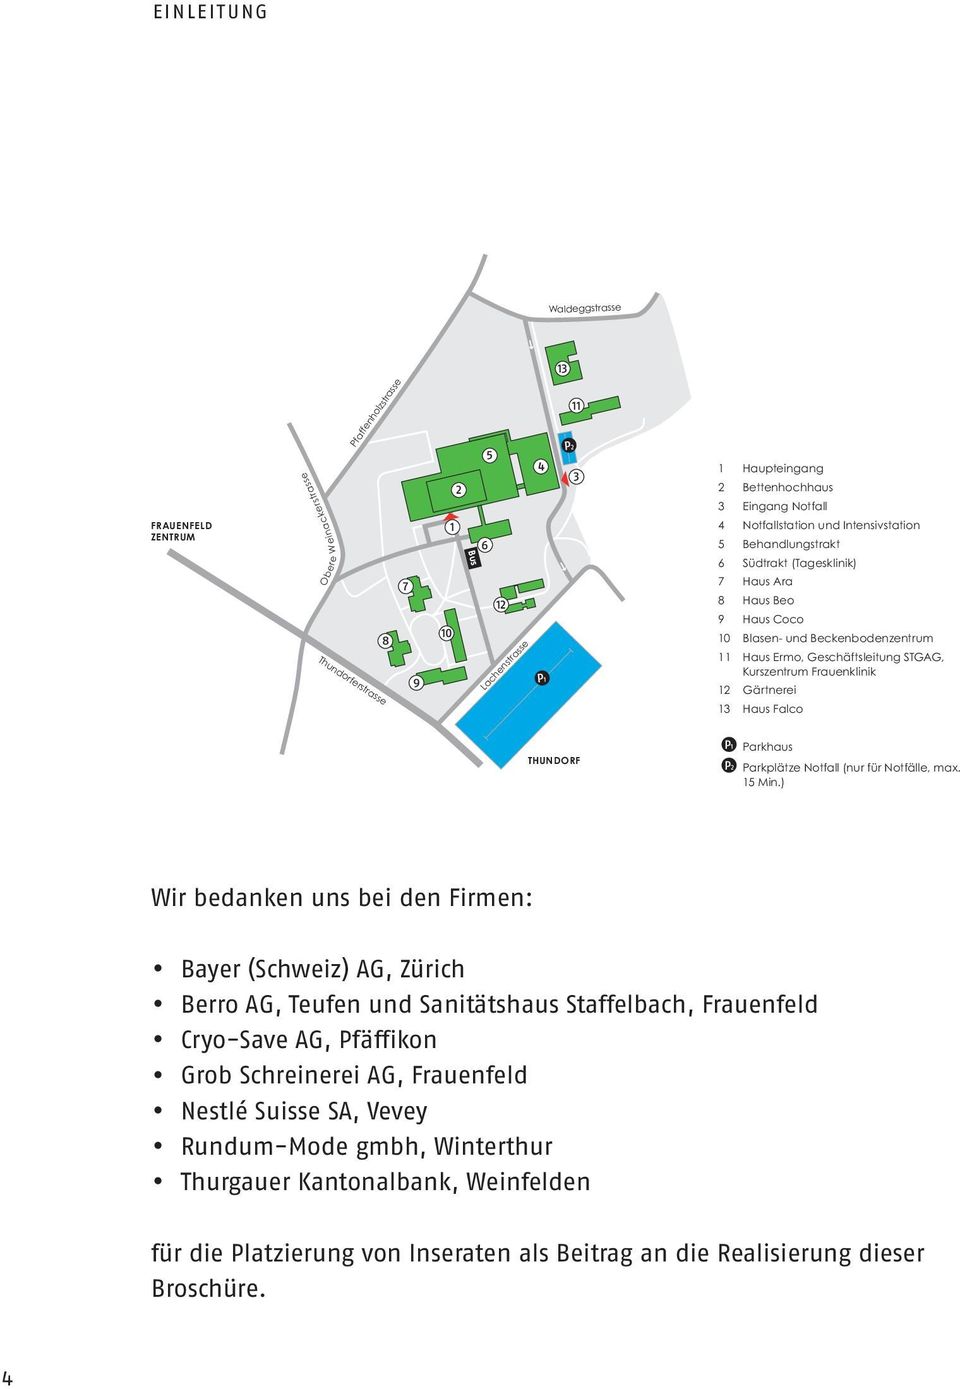 STGAG, Kurszentrum Frauenklinik 12 Gärtnerei 13 Haus Falco THUNDORF P1 Parkhaus P2 Parkplätze Notfall (nur für Notfälle, max. 15 Min.